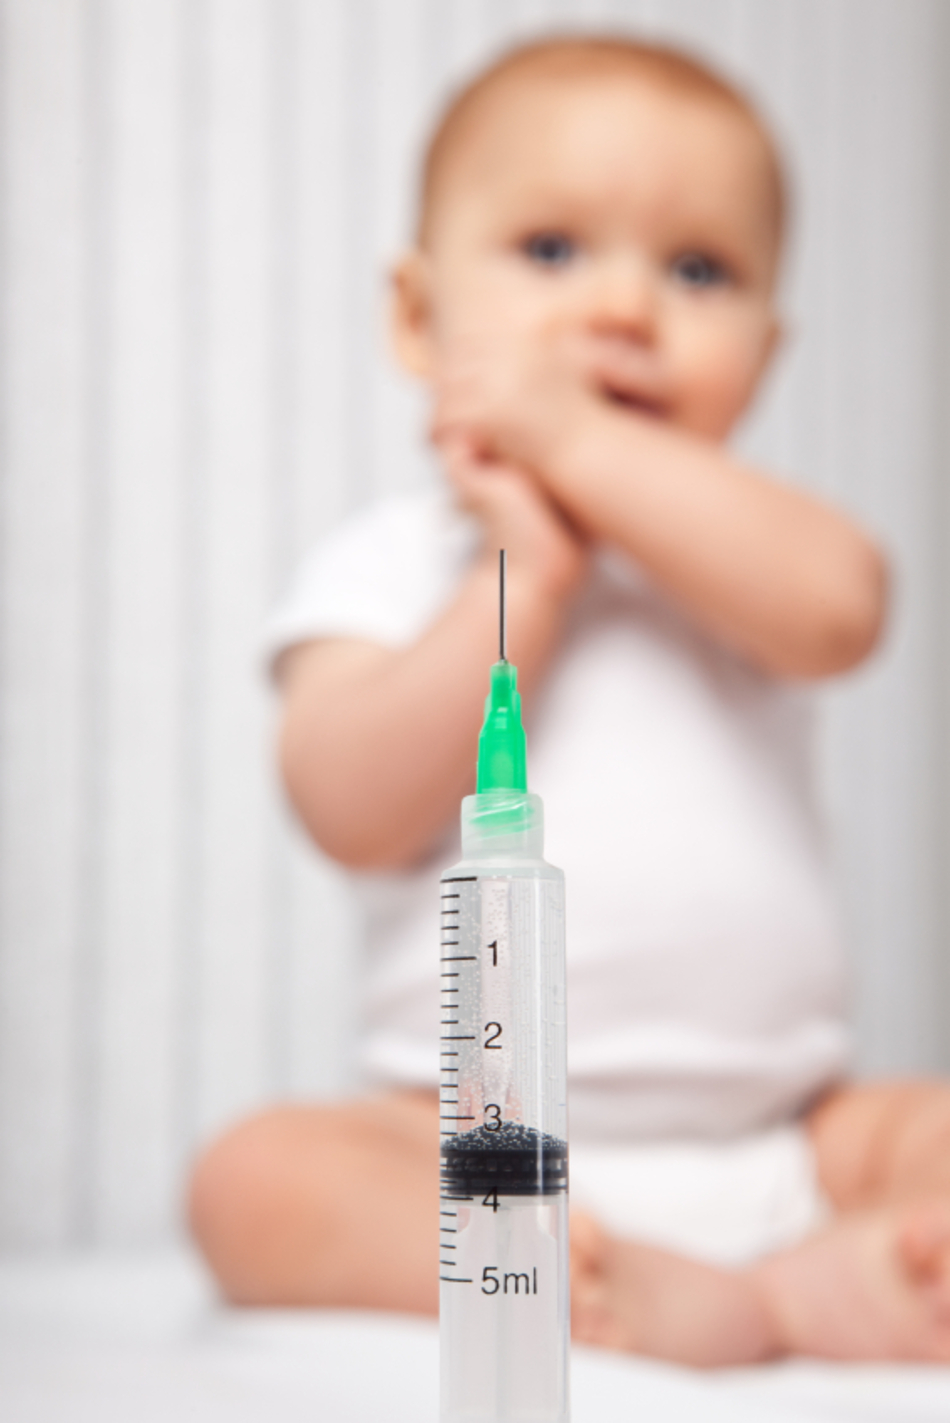 Why Does My Newborn Need So Many Immunizations?